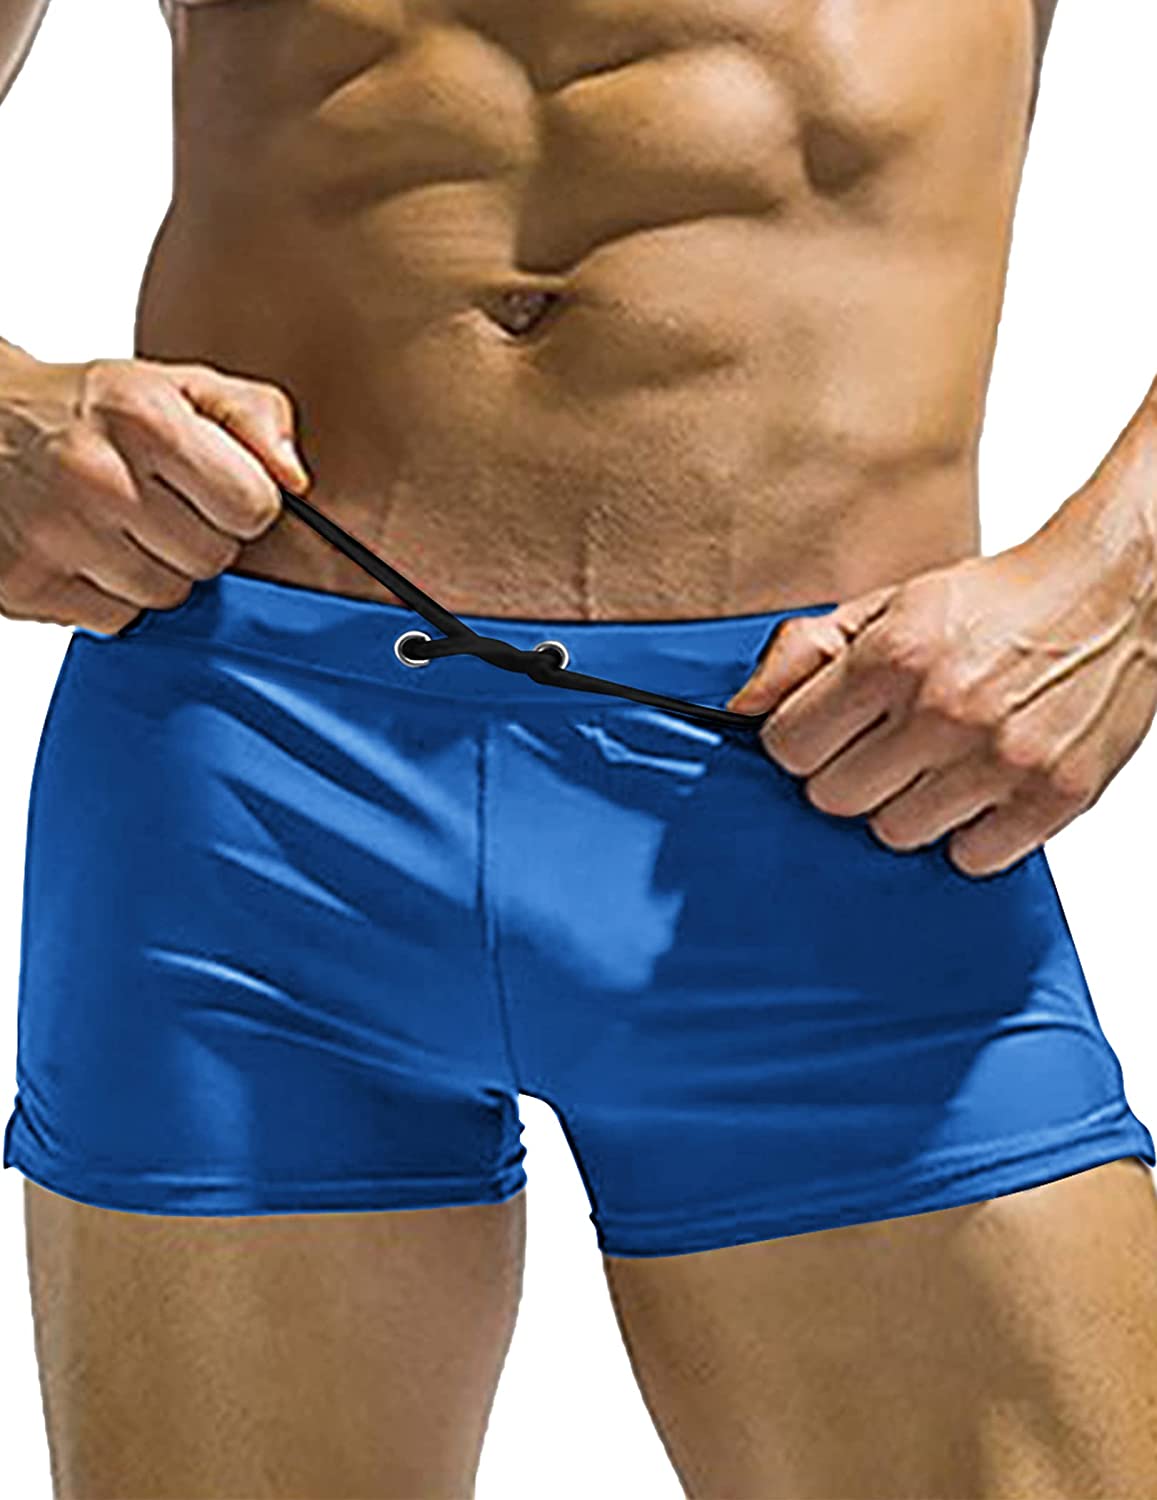 Square Cut swim trunks for men by Brigitewear